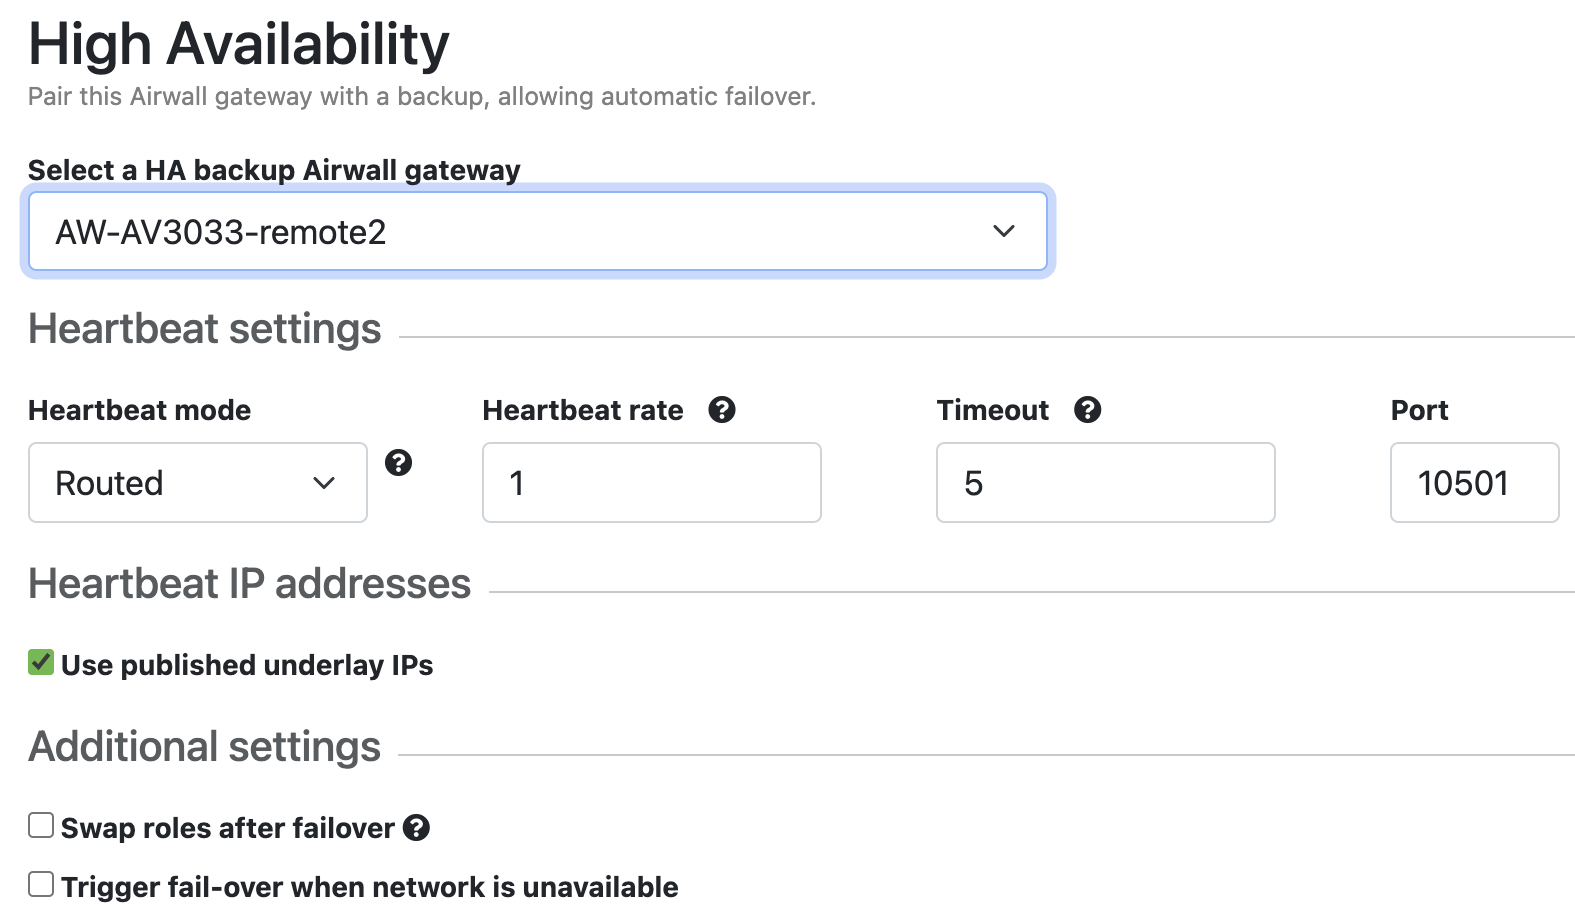 Heartbeat settings on an HA Airwall Gateway pair